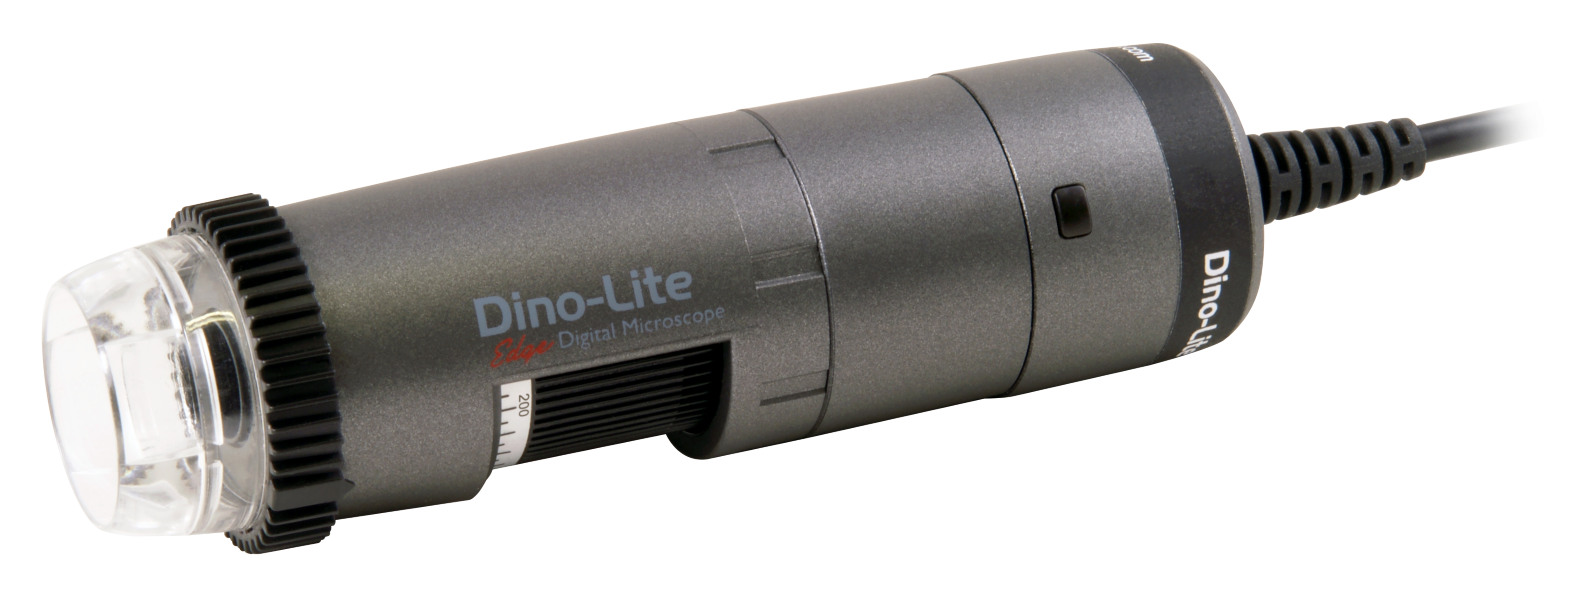 Dino-Lite Edge AF4515ZTL USB Digital Microscope